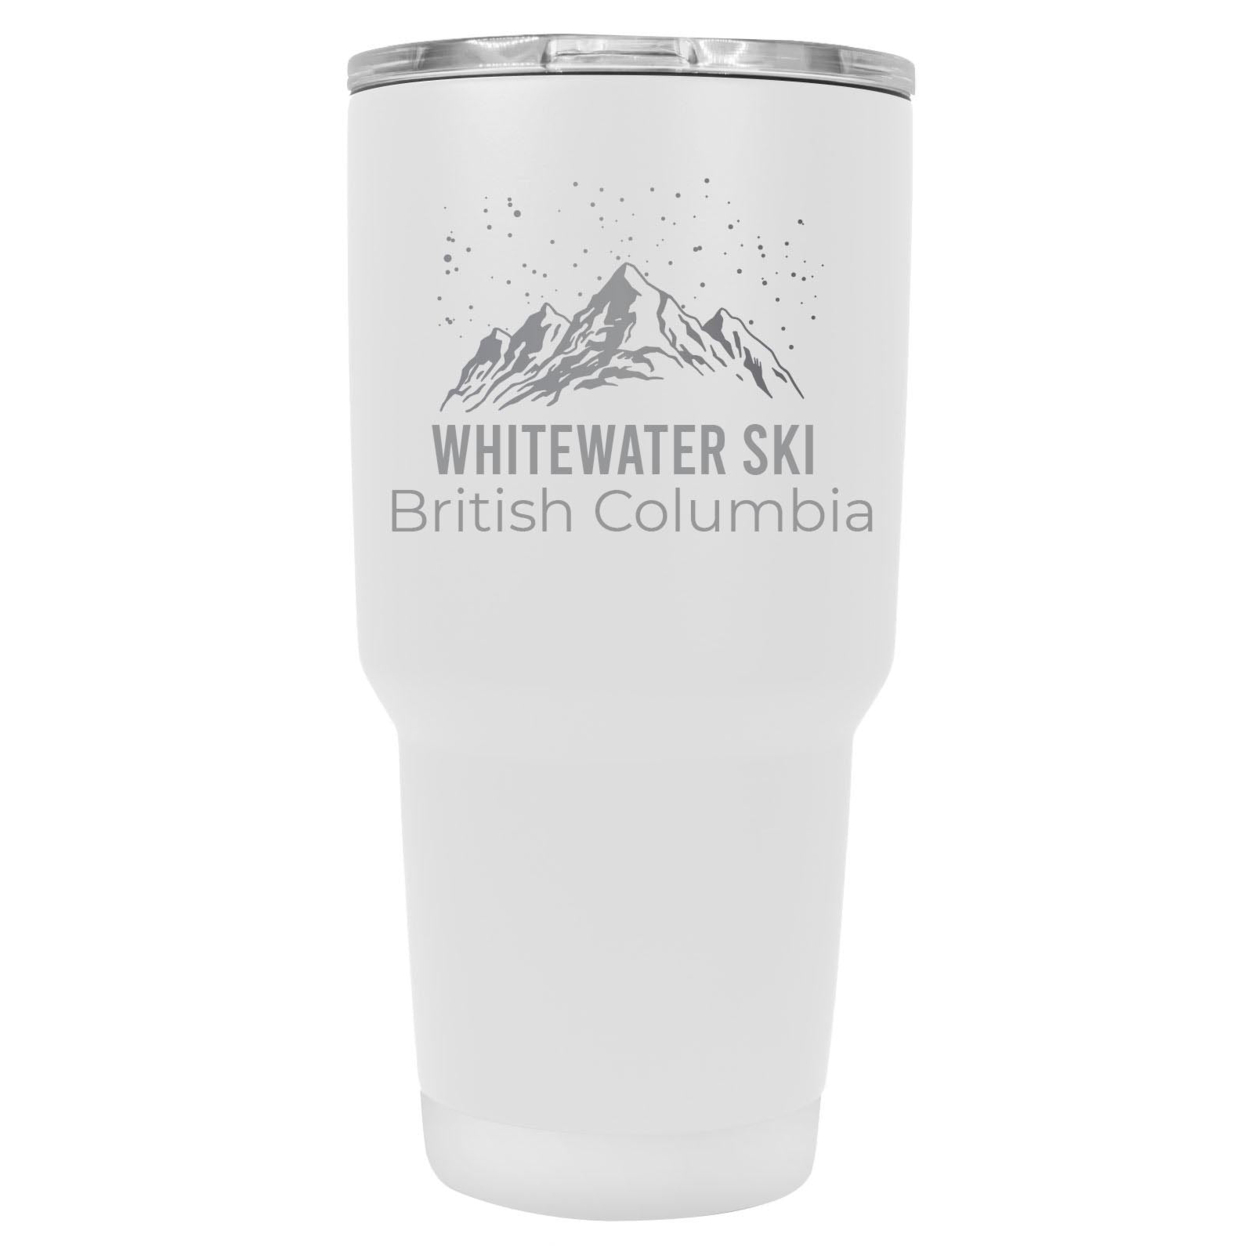 Whitewater Ski British Columbia Ski Snowboard Winter Souvenir Laser Engraved 24 Oz Insulated Stainless Steel Tumbler - Rose Gold